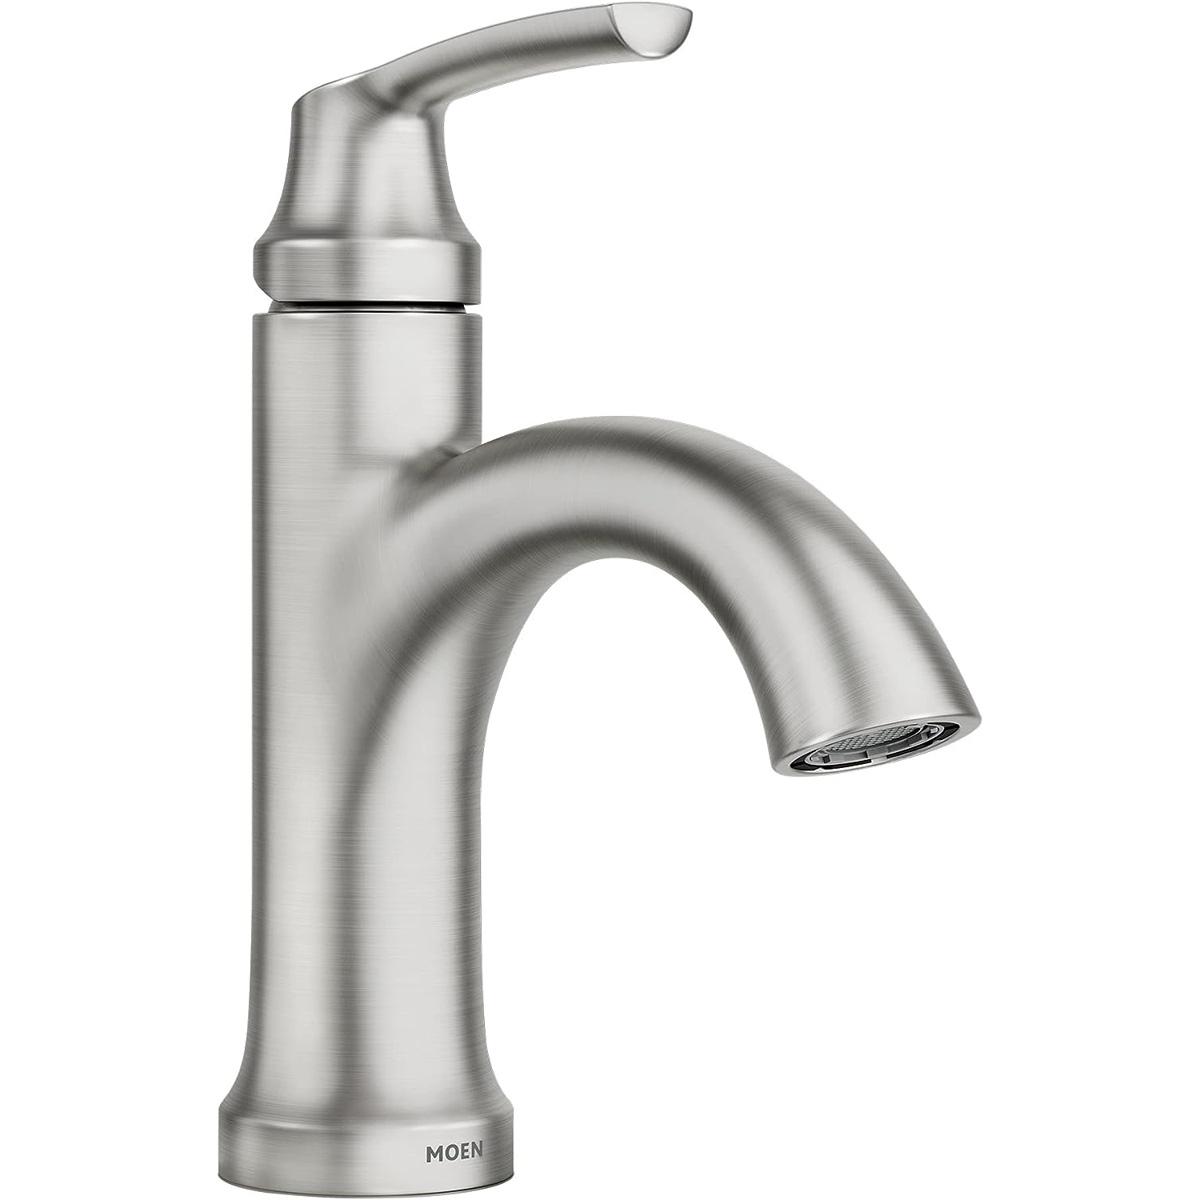 Moen Wellton Single-Handle Spot Resistant Bathroom Faucet for $35.55 Shipped